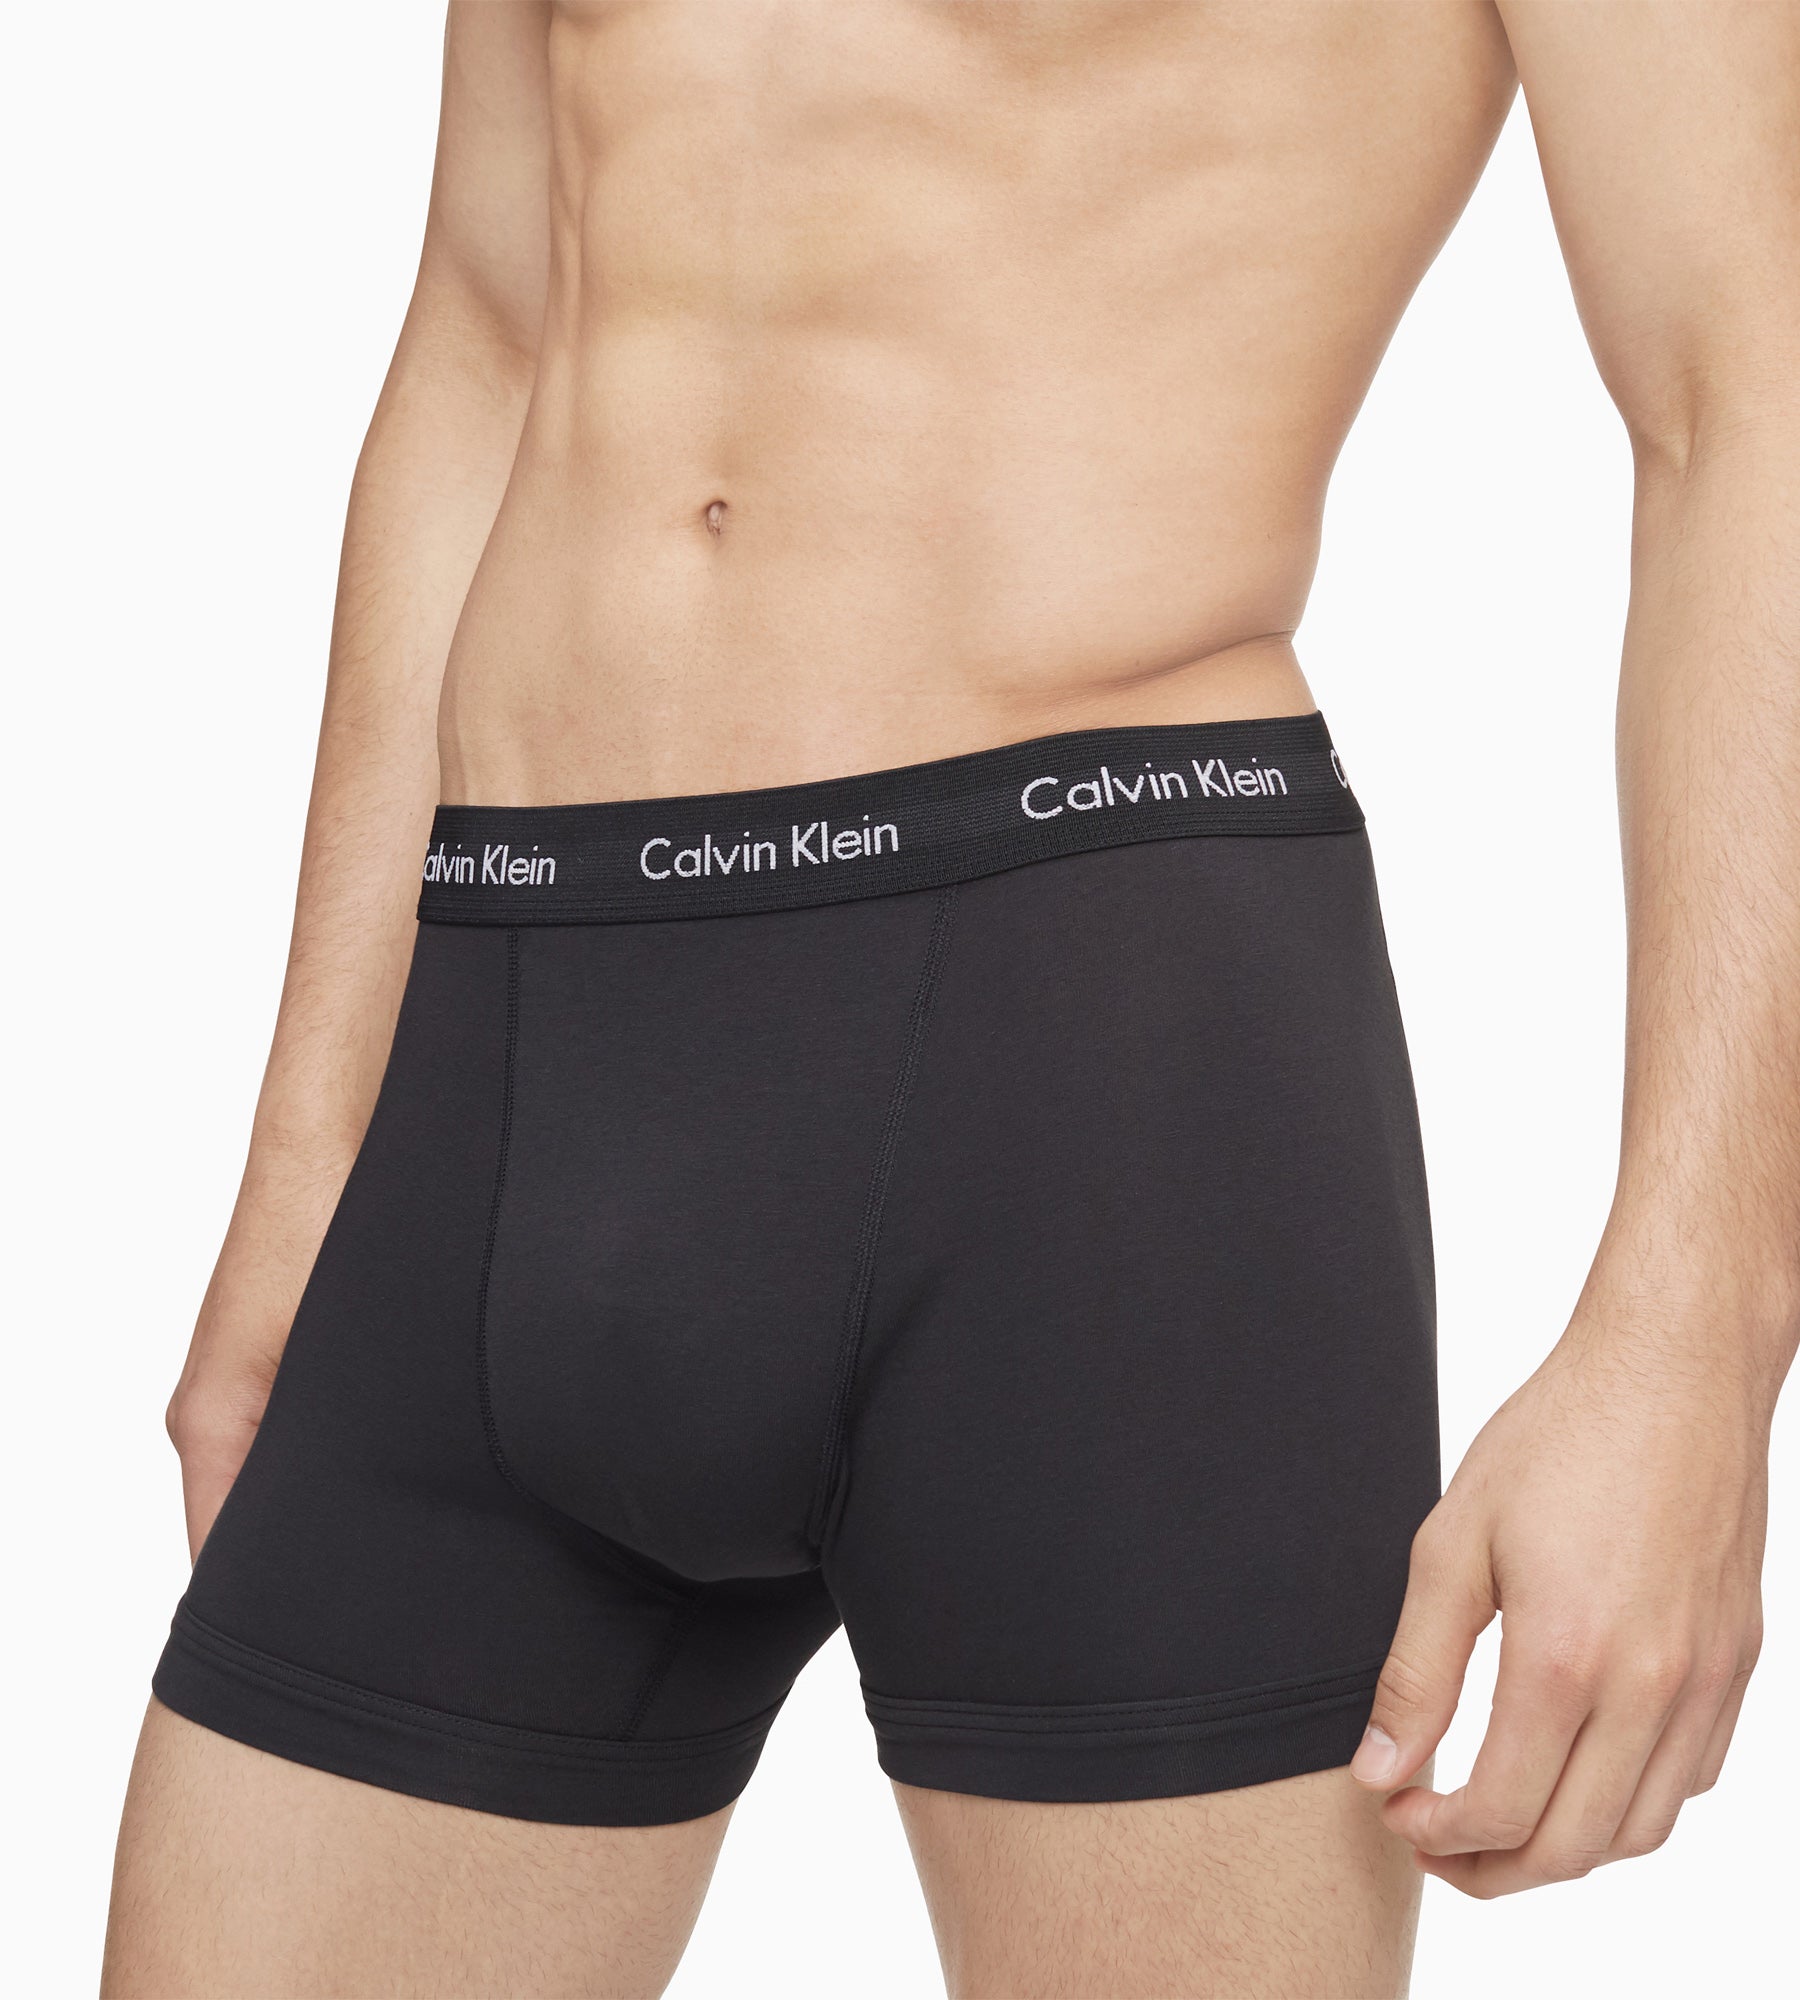 Wrangler Mens 3 Pack Boxers Mayes Soft Cotton Blend Trunks Logo Underwear 